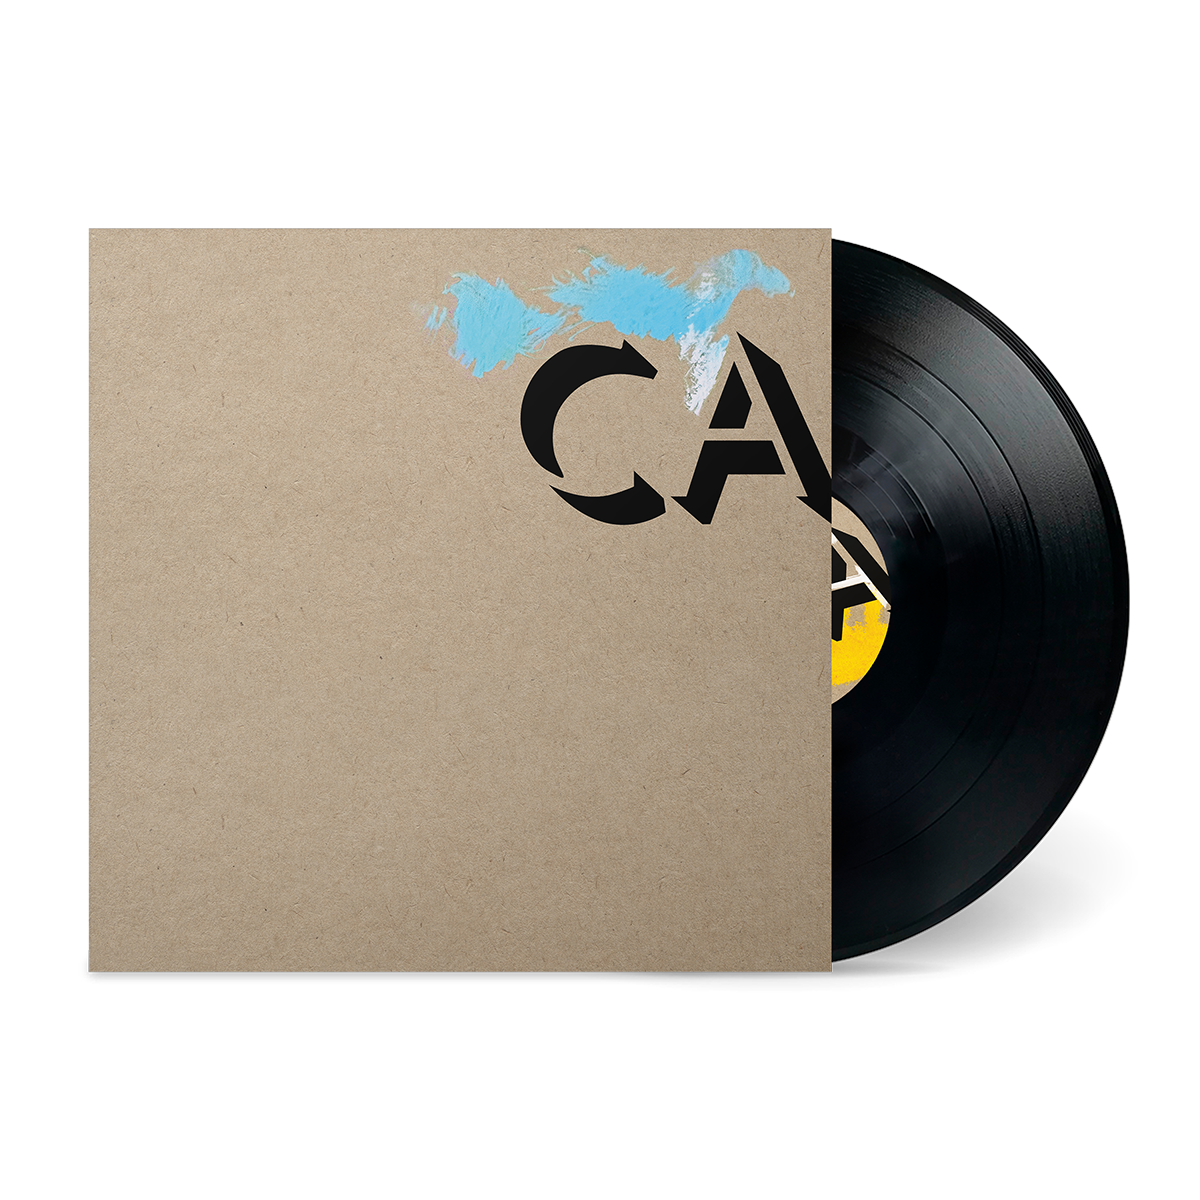 Canaan Amber - CA: Vinyl LP